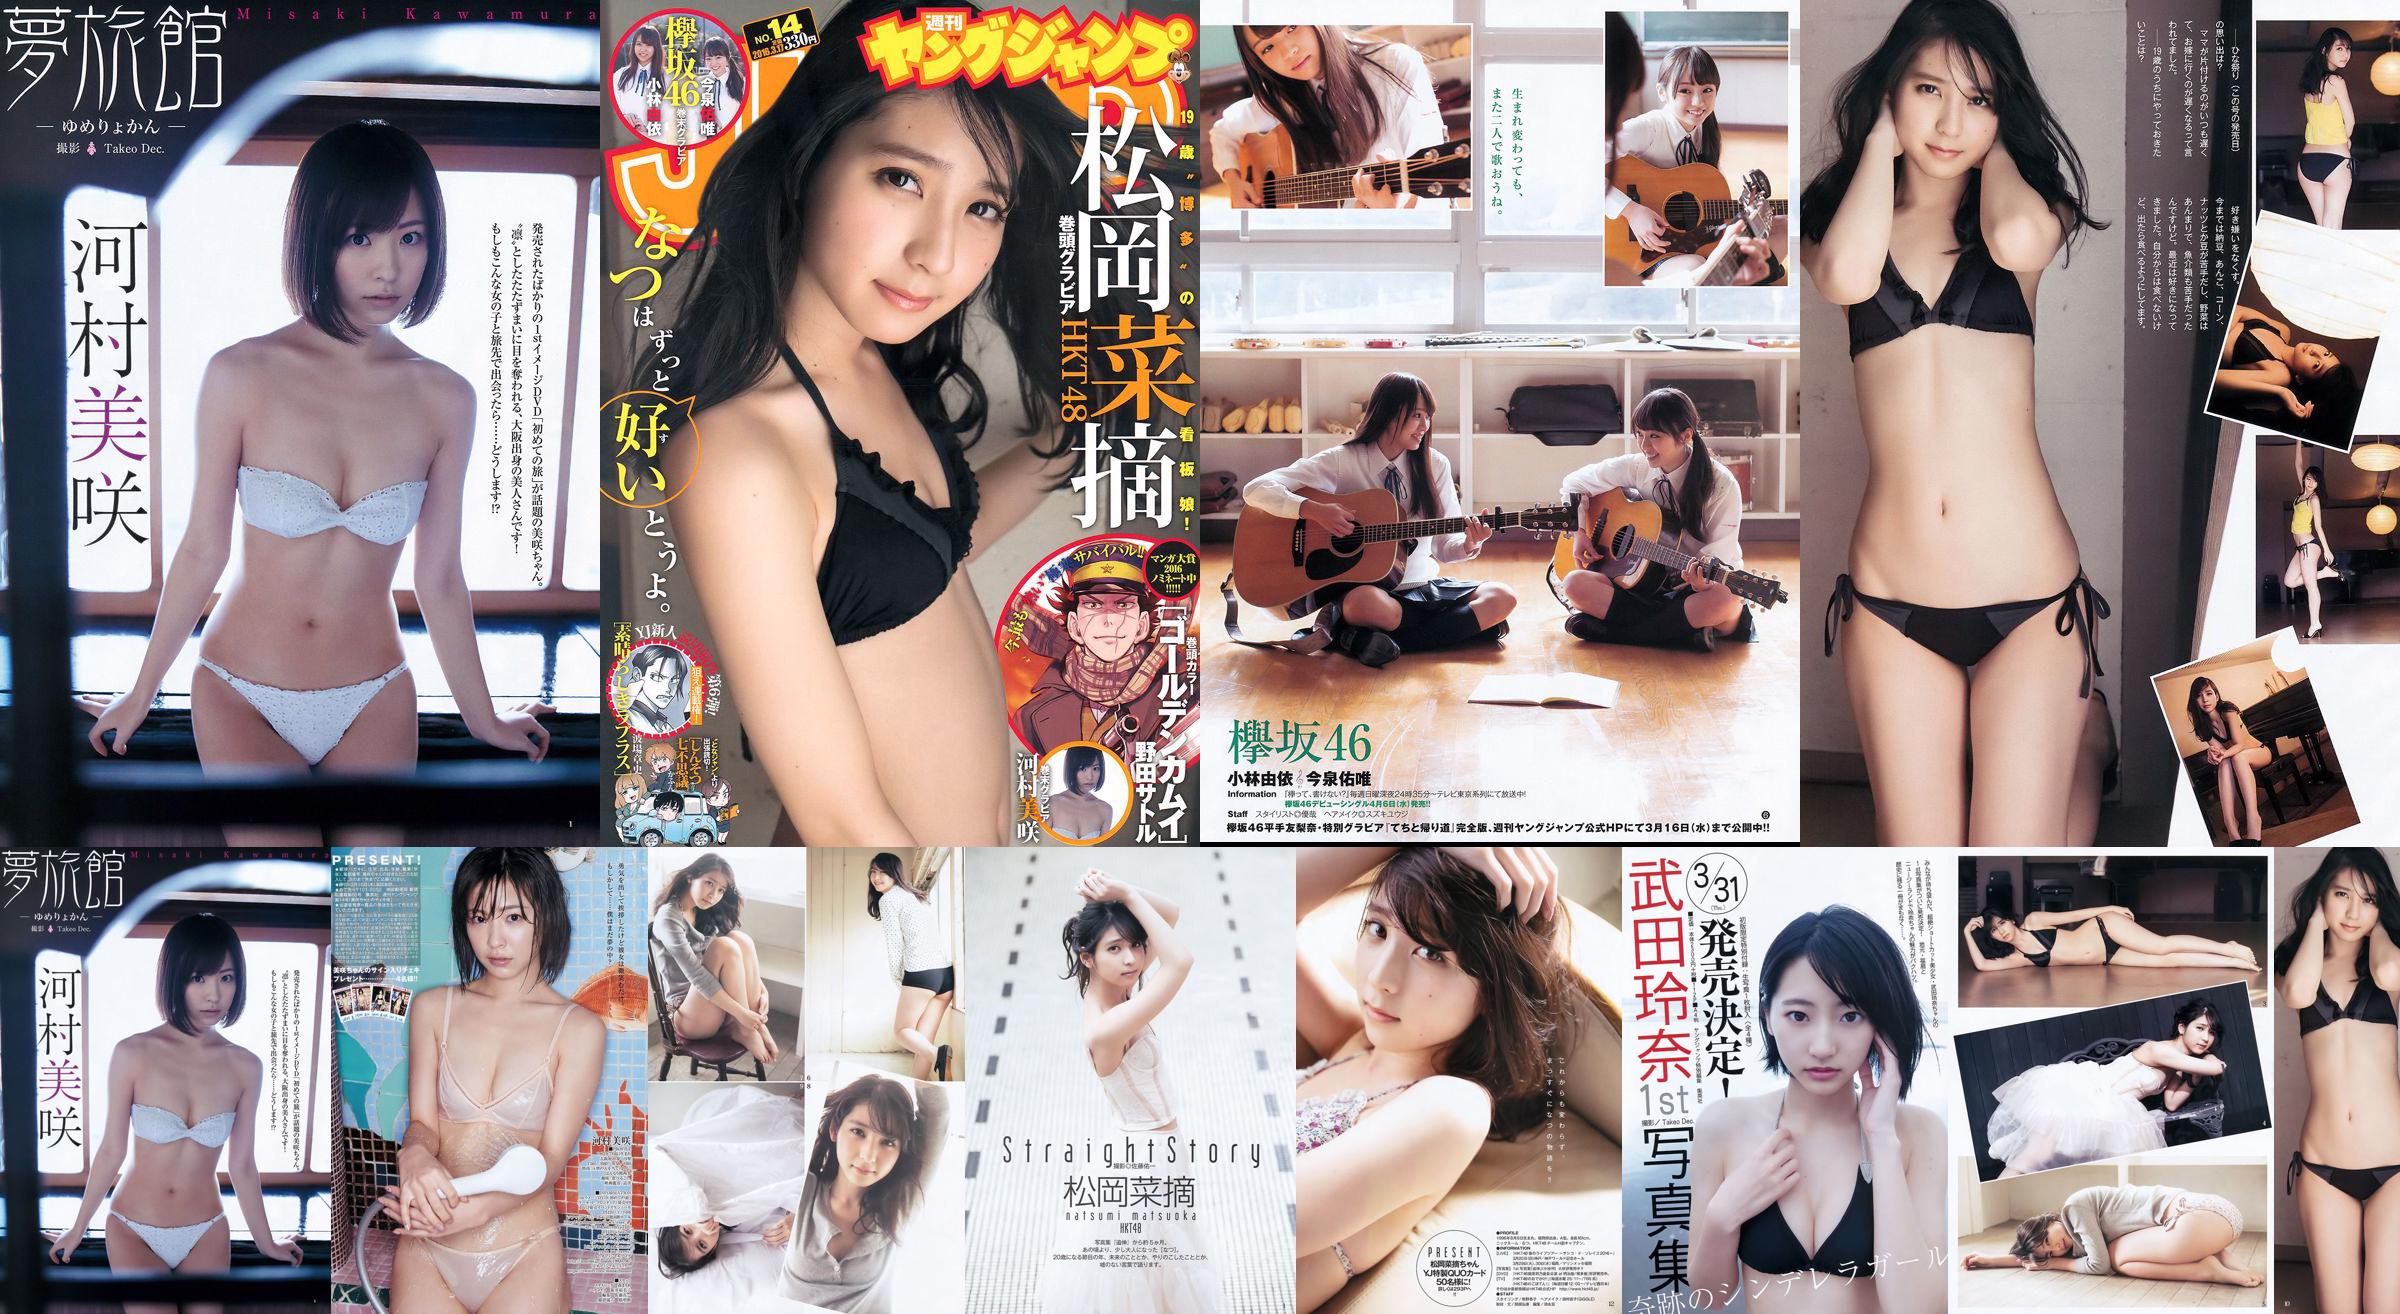 Hái rau Muraoka Yui Kobayashi Yui Imaizumi Misaki Kawamura [Weekly Young Jump] Tạp chí ảnh số 14 năm 2016 No.276d36 Trang 1